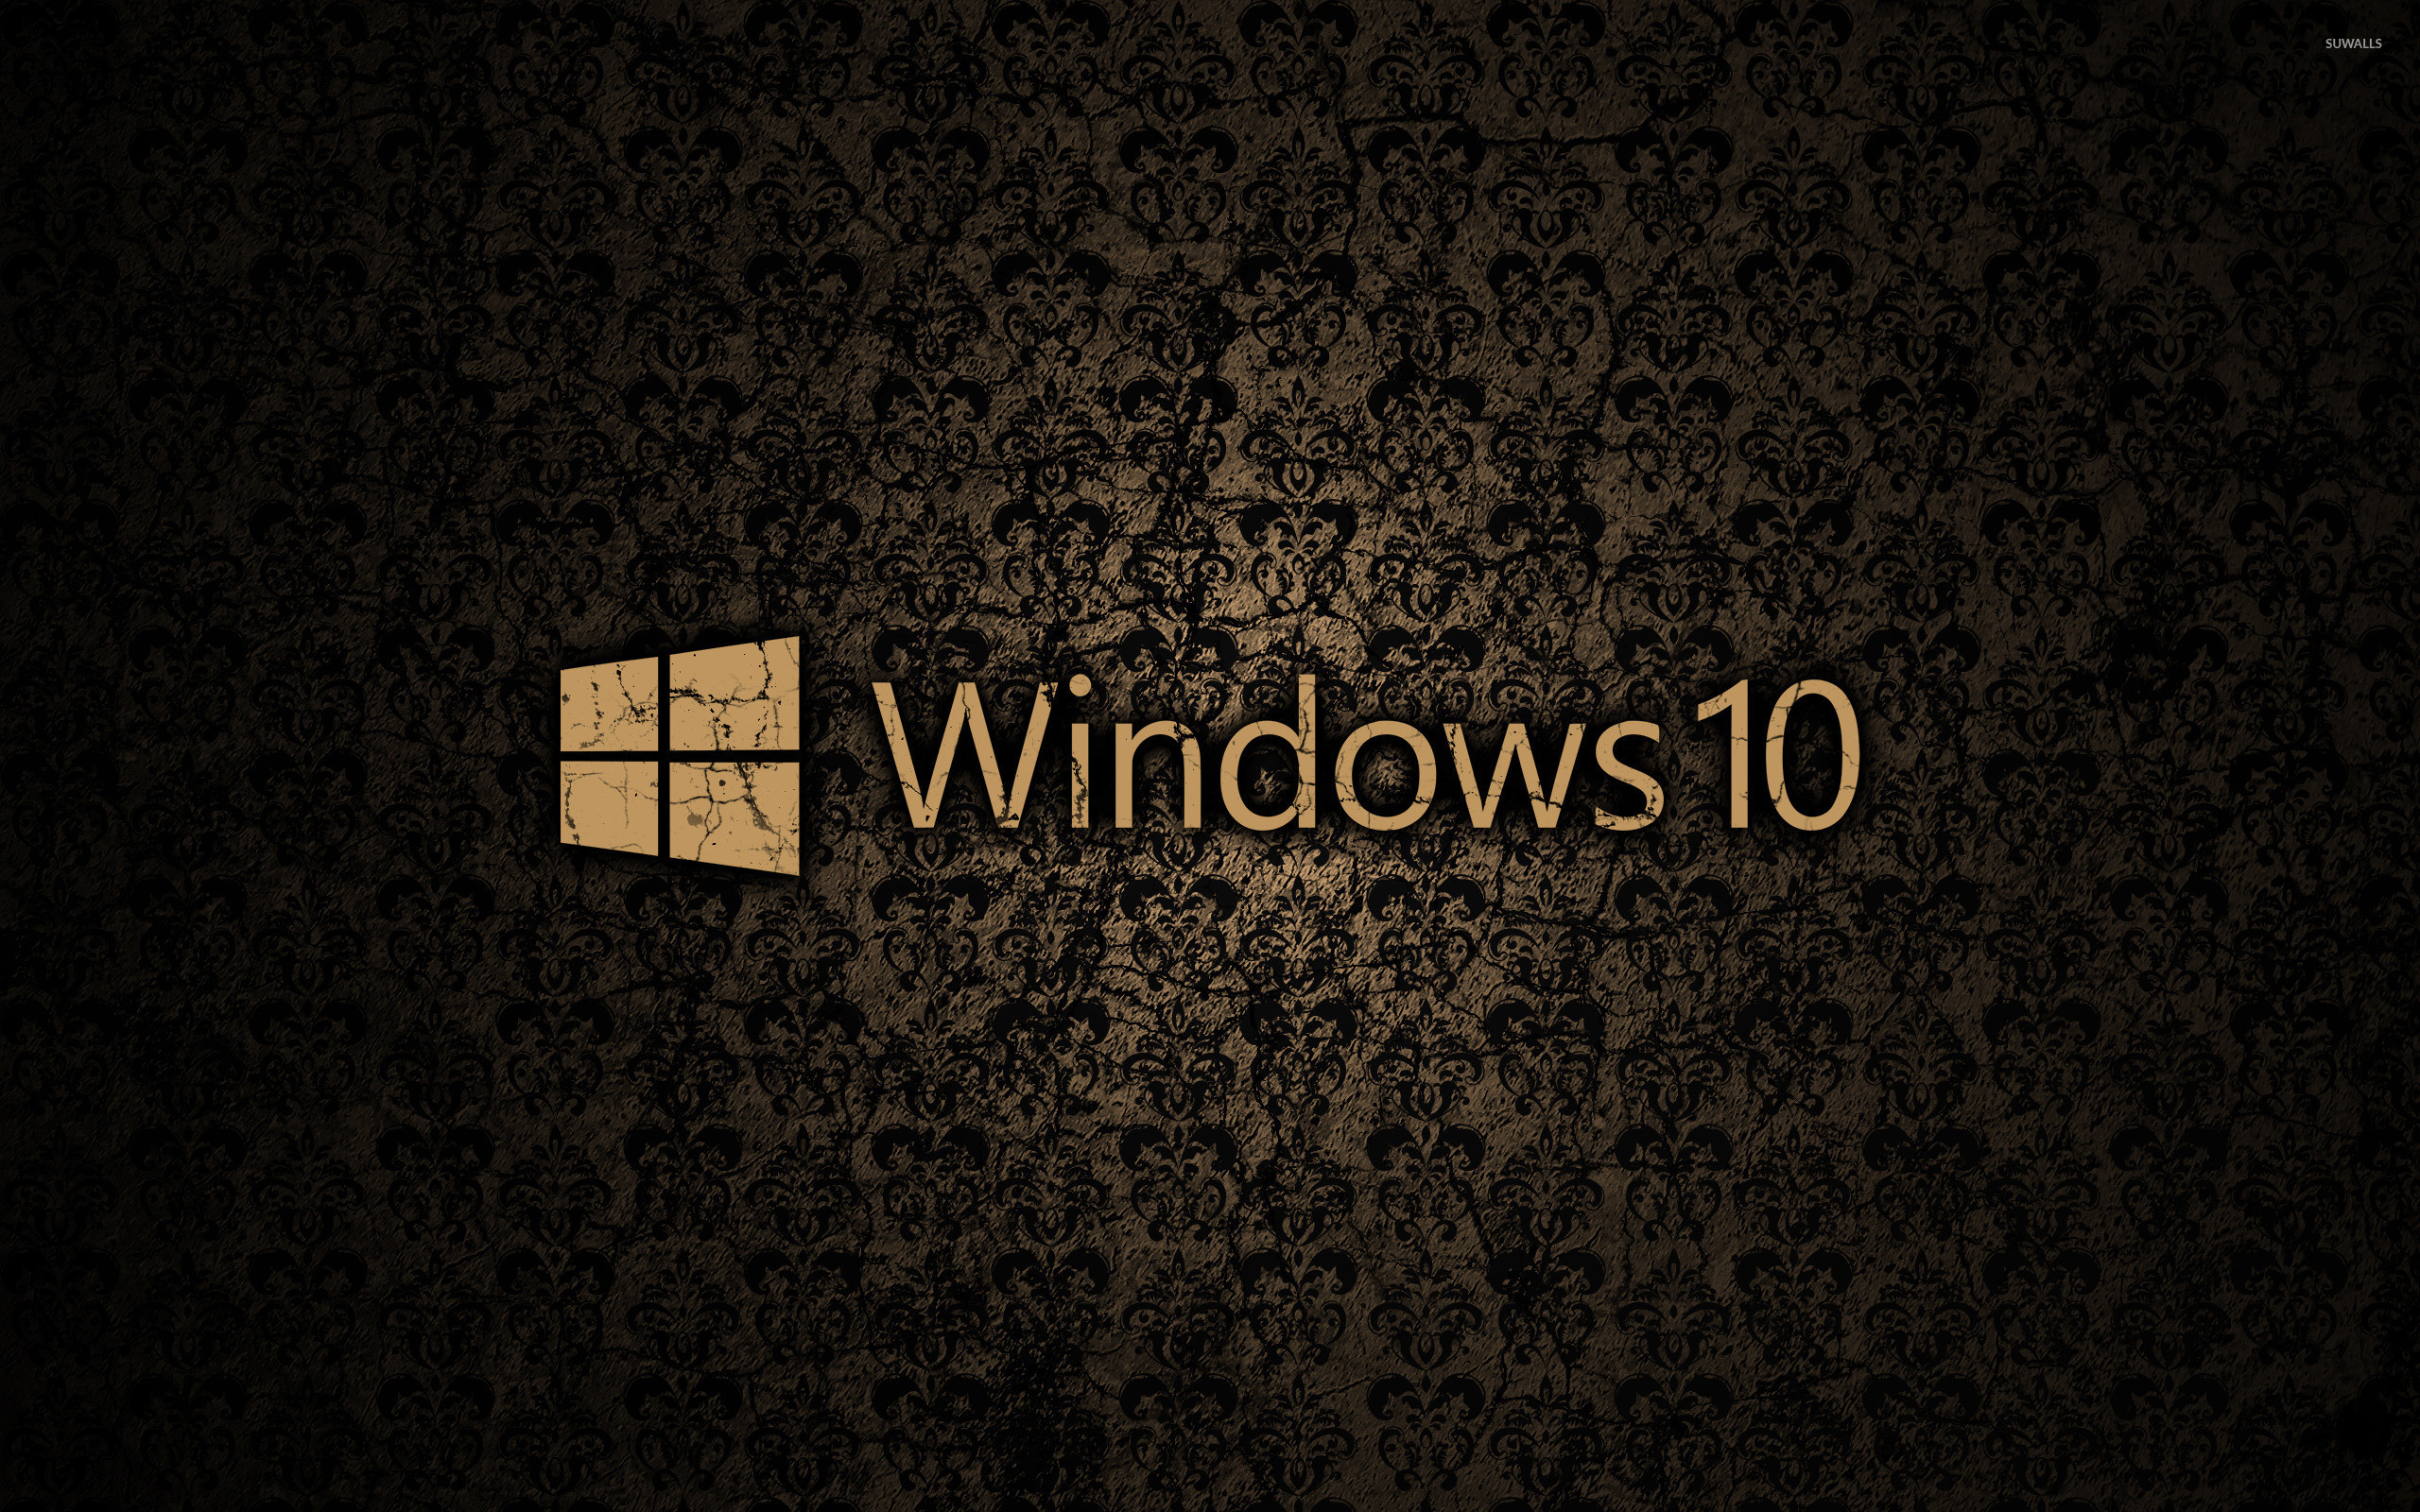 2560x1600 Windows 10 text logo on a cracked wall wallpaper